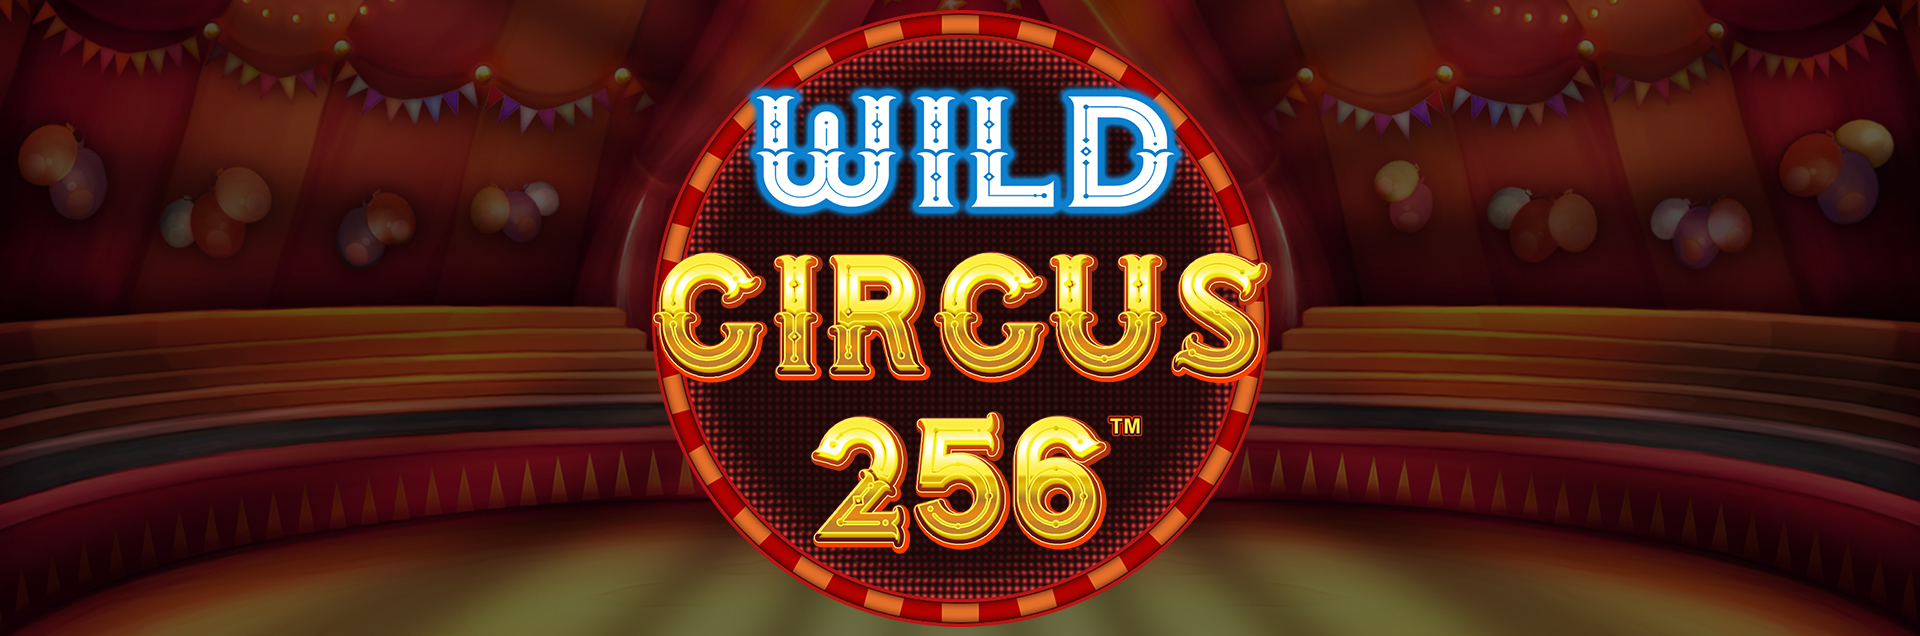 Wild Circus 256 header games